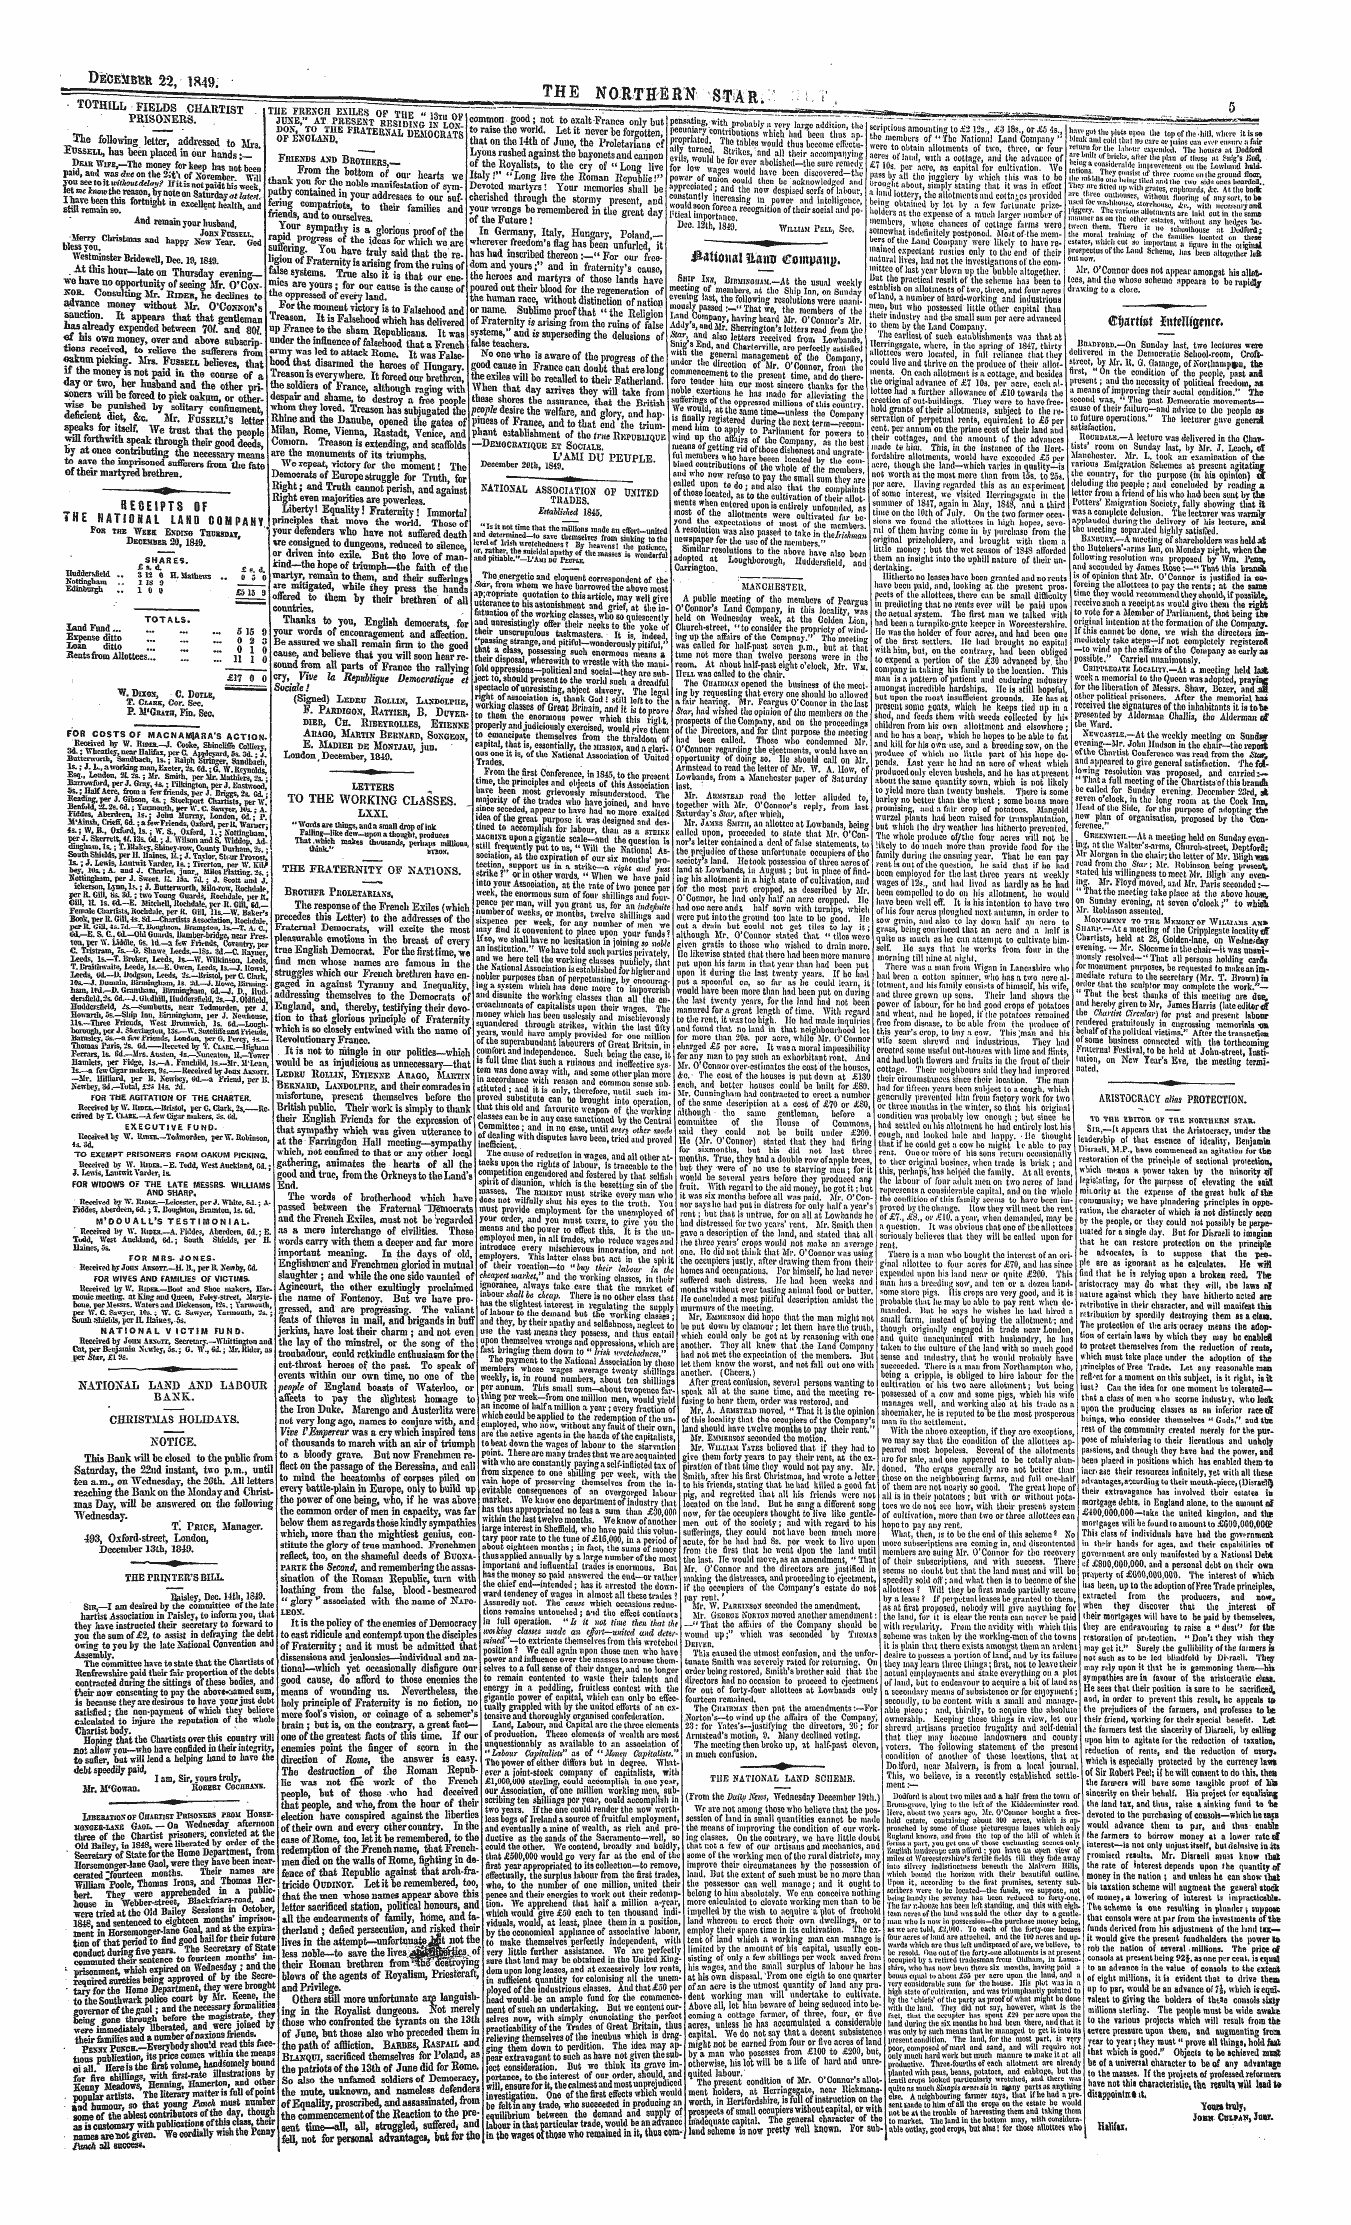 Northern Star (1837-1852): jS F Y, 1st edition - I*Aticmal Ilain Compiii)